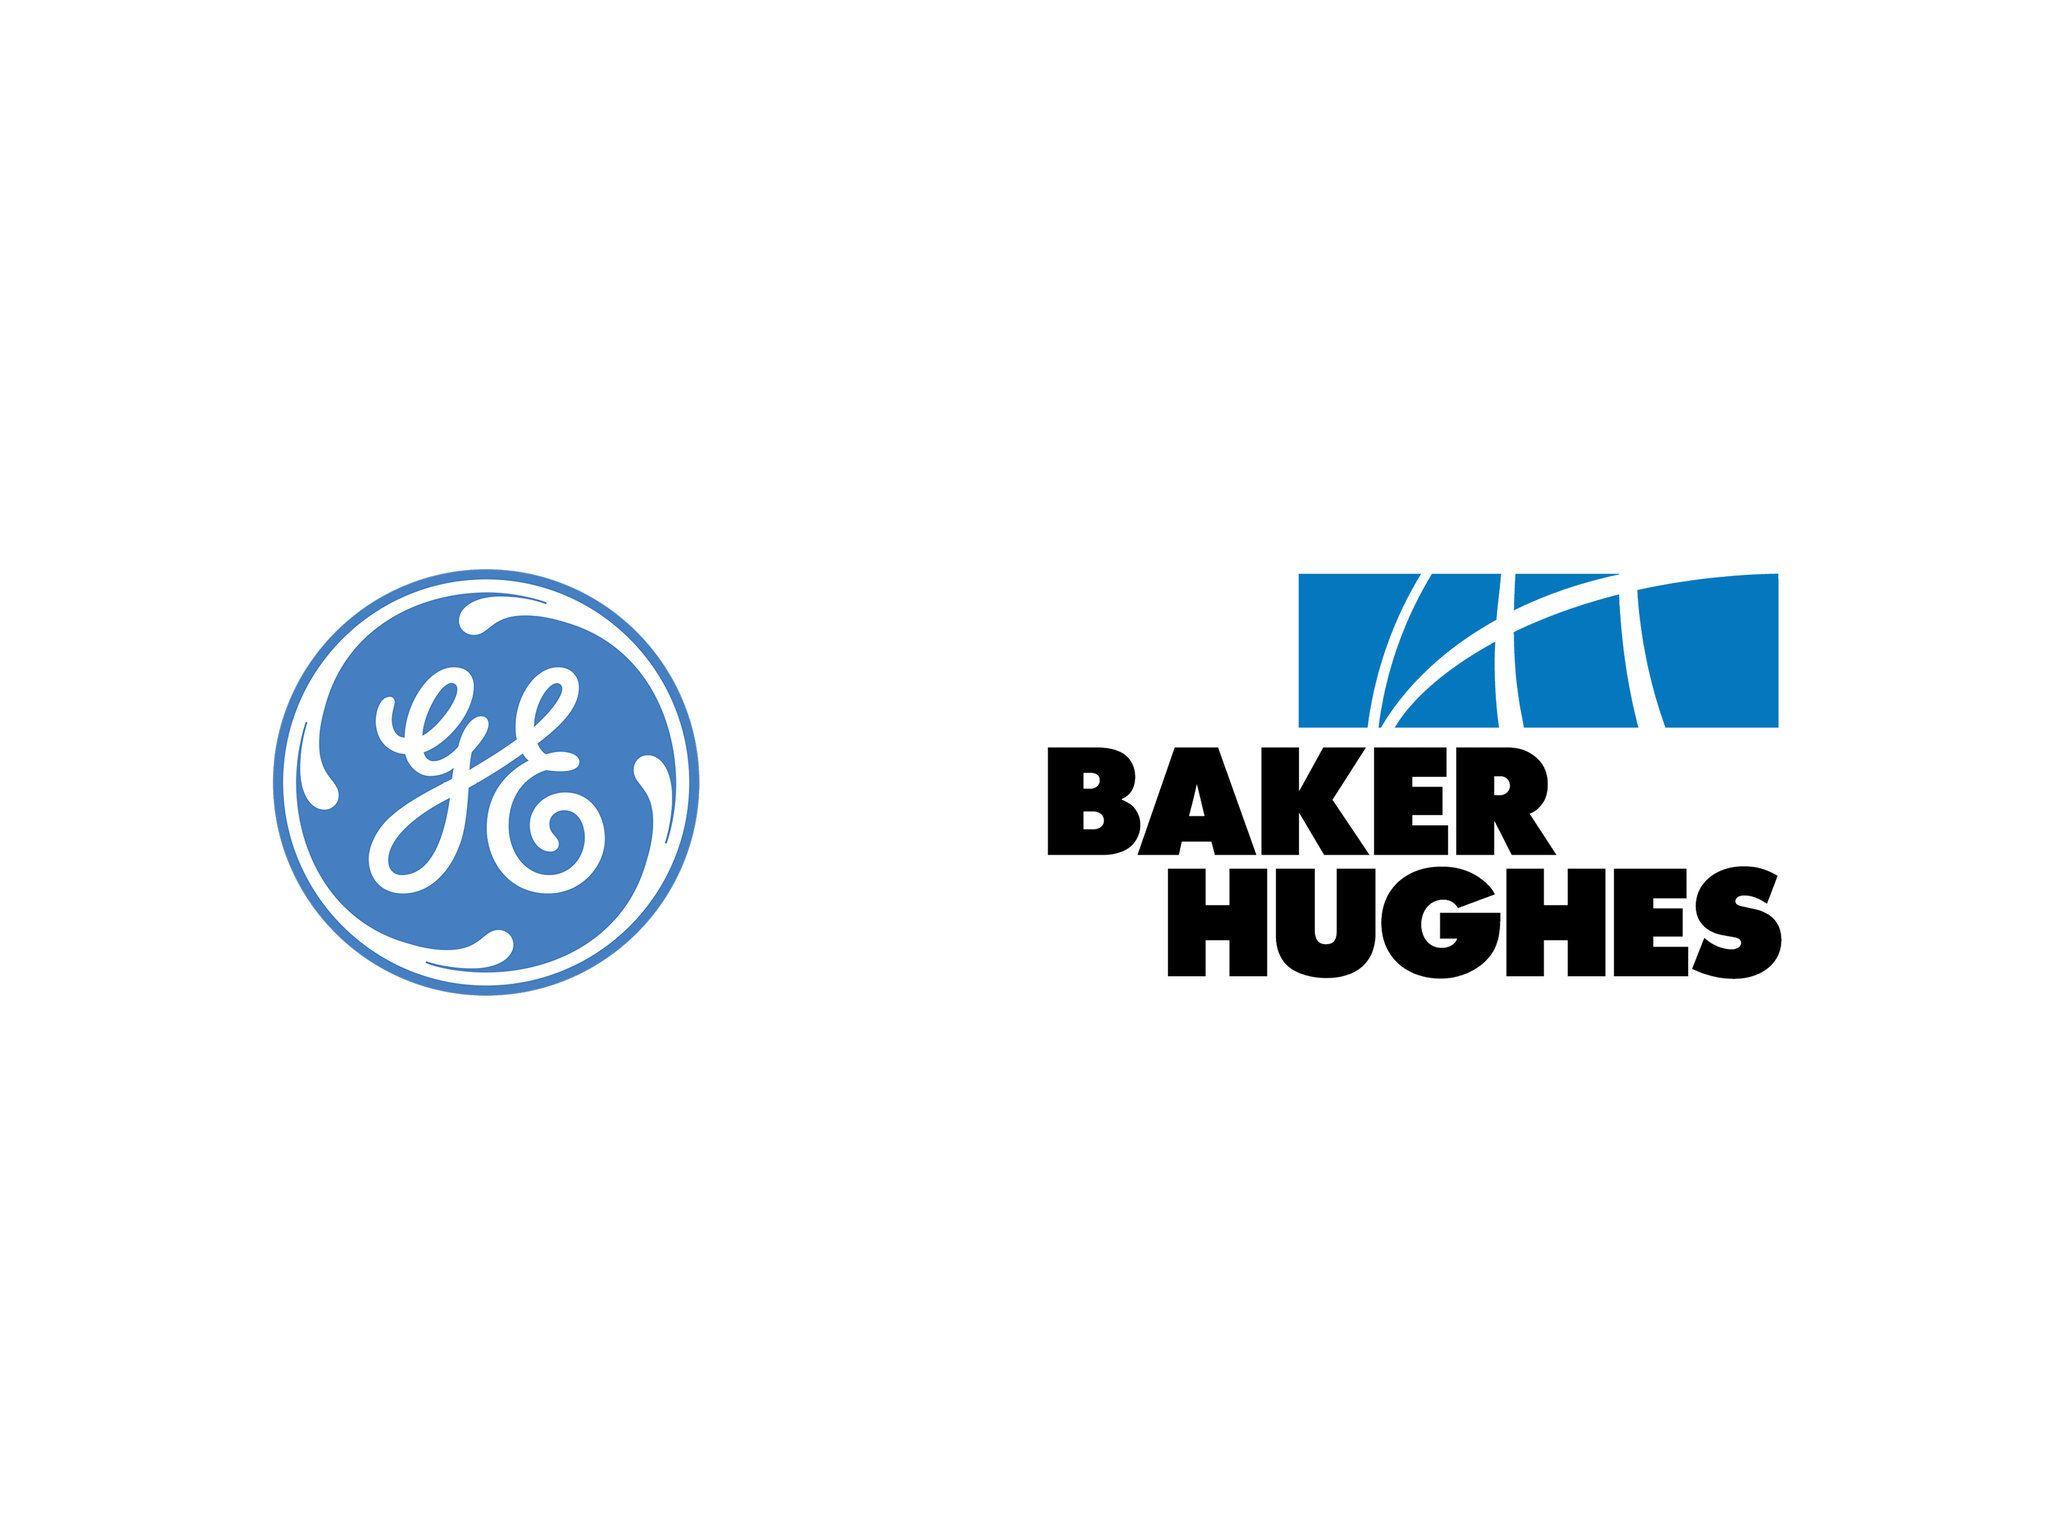 GE Company Logo - Baker Hughes, A GE Company - REBRAND